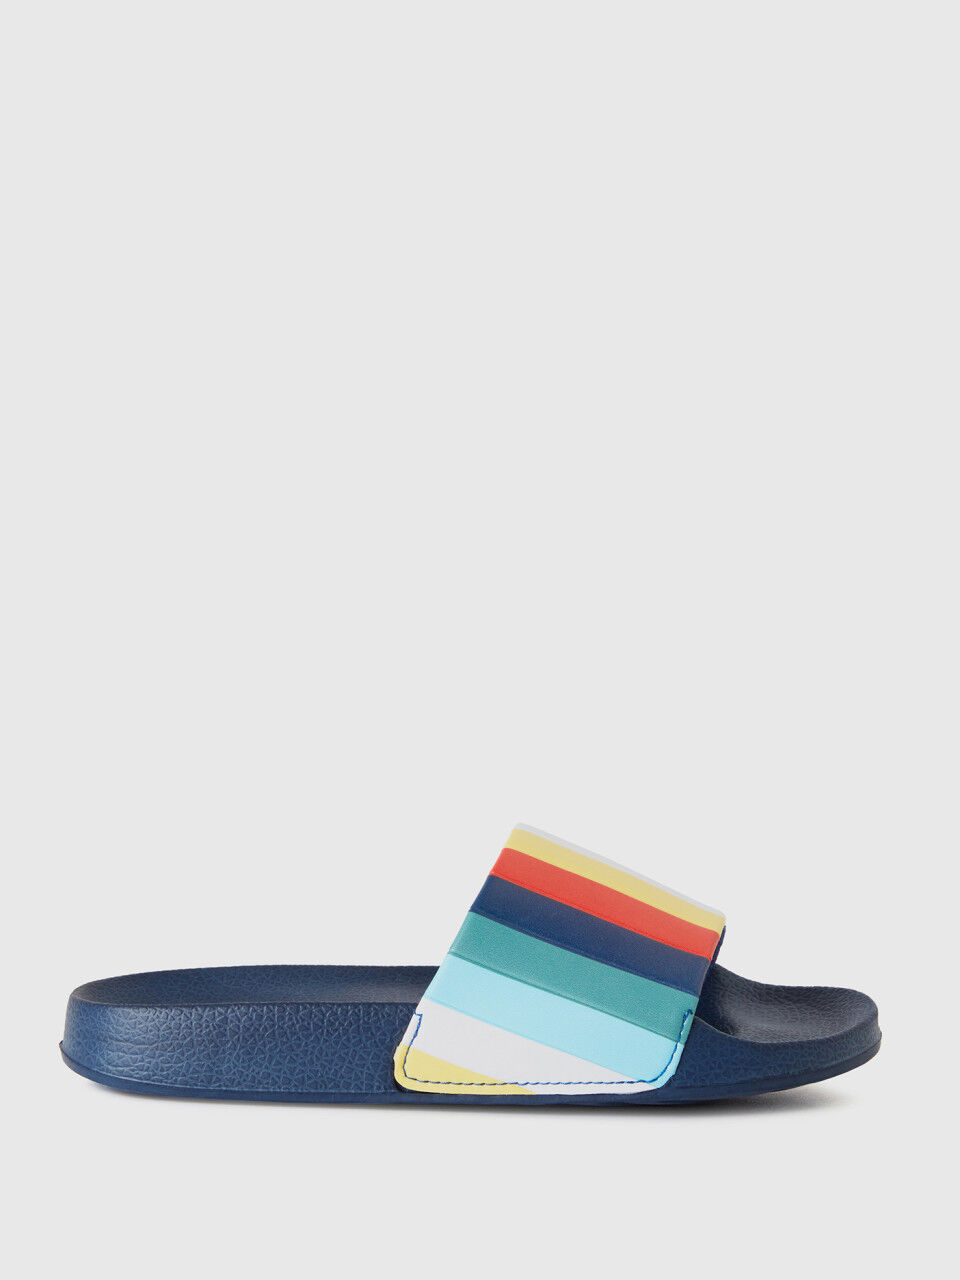 Multicolored striped slippers